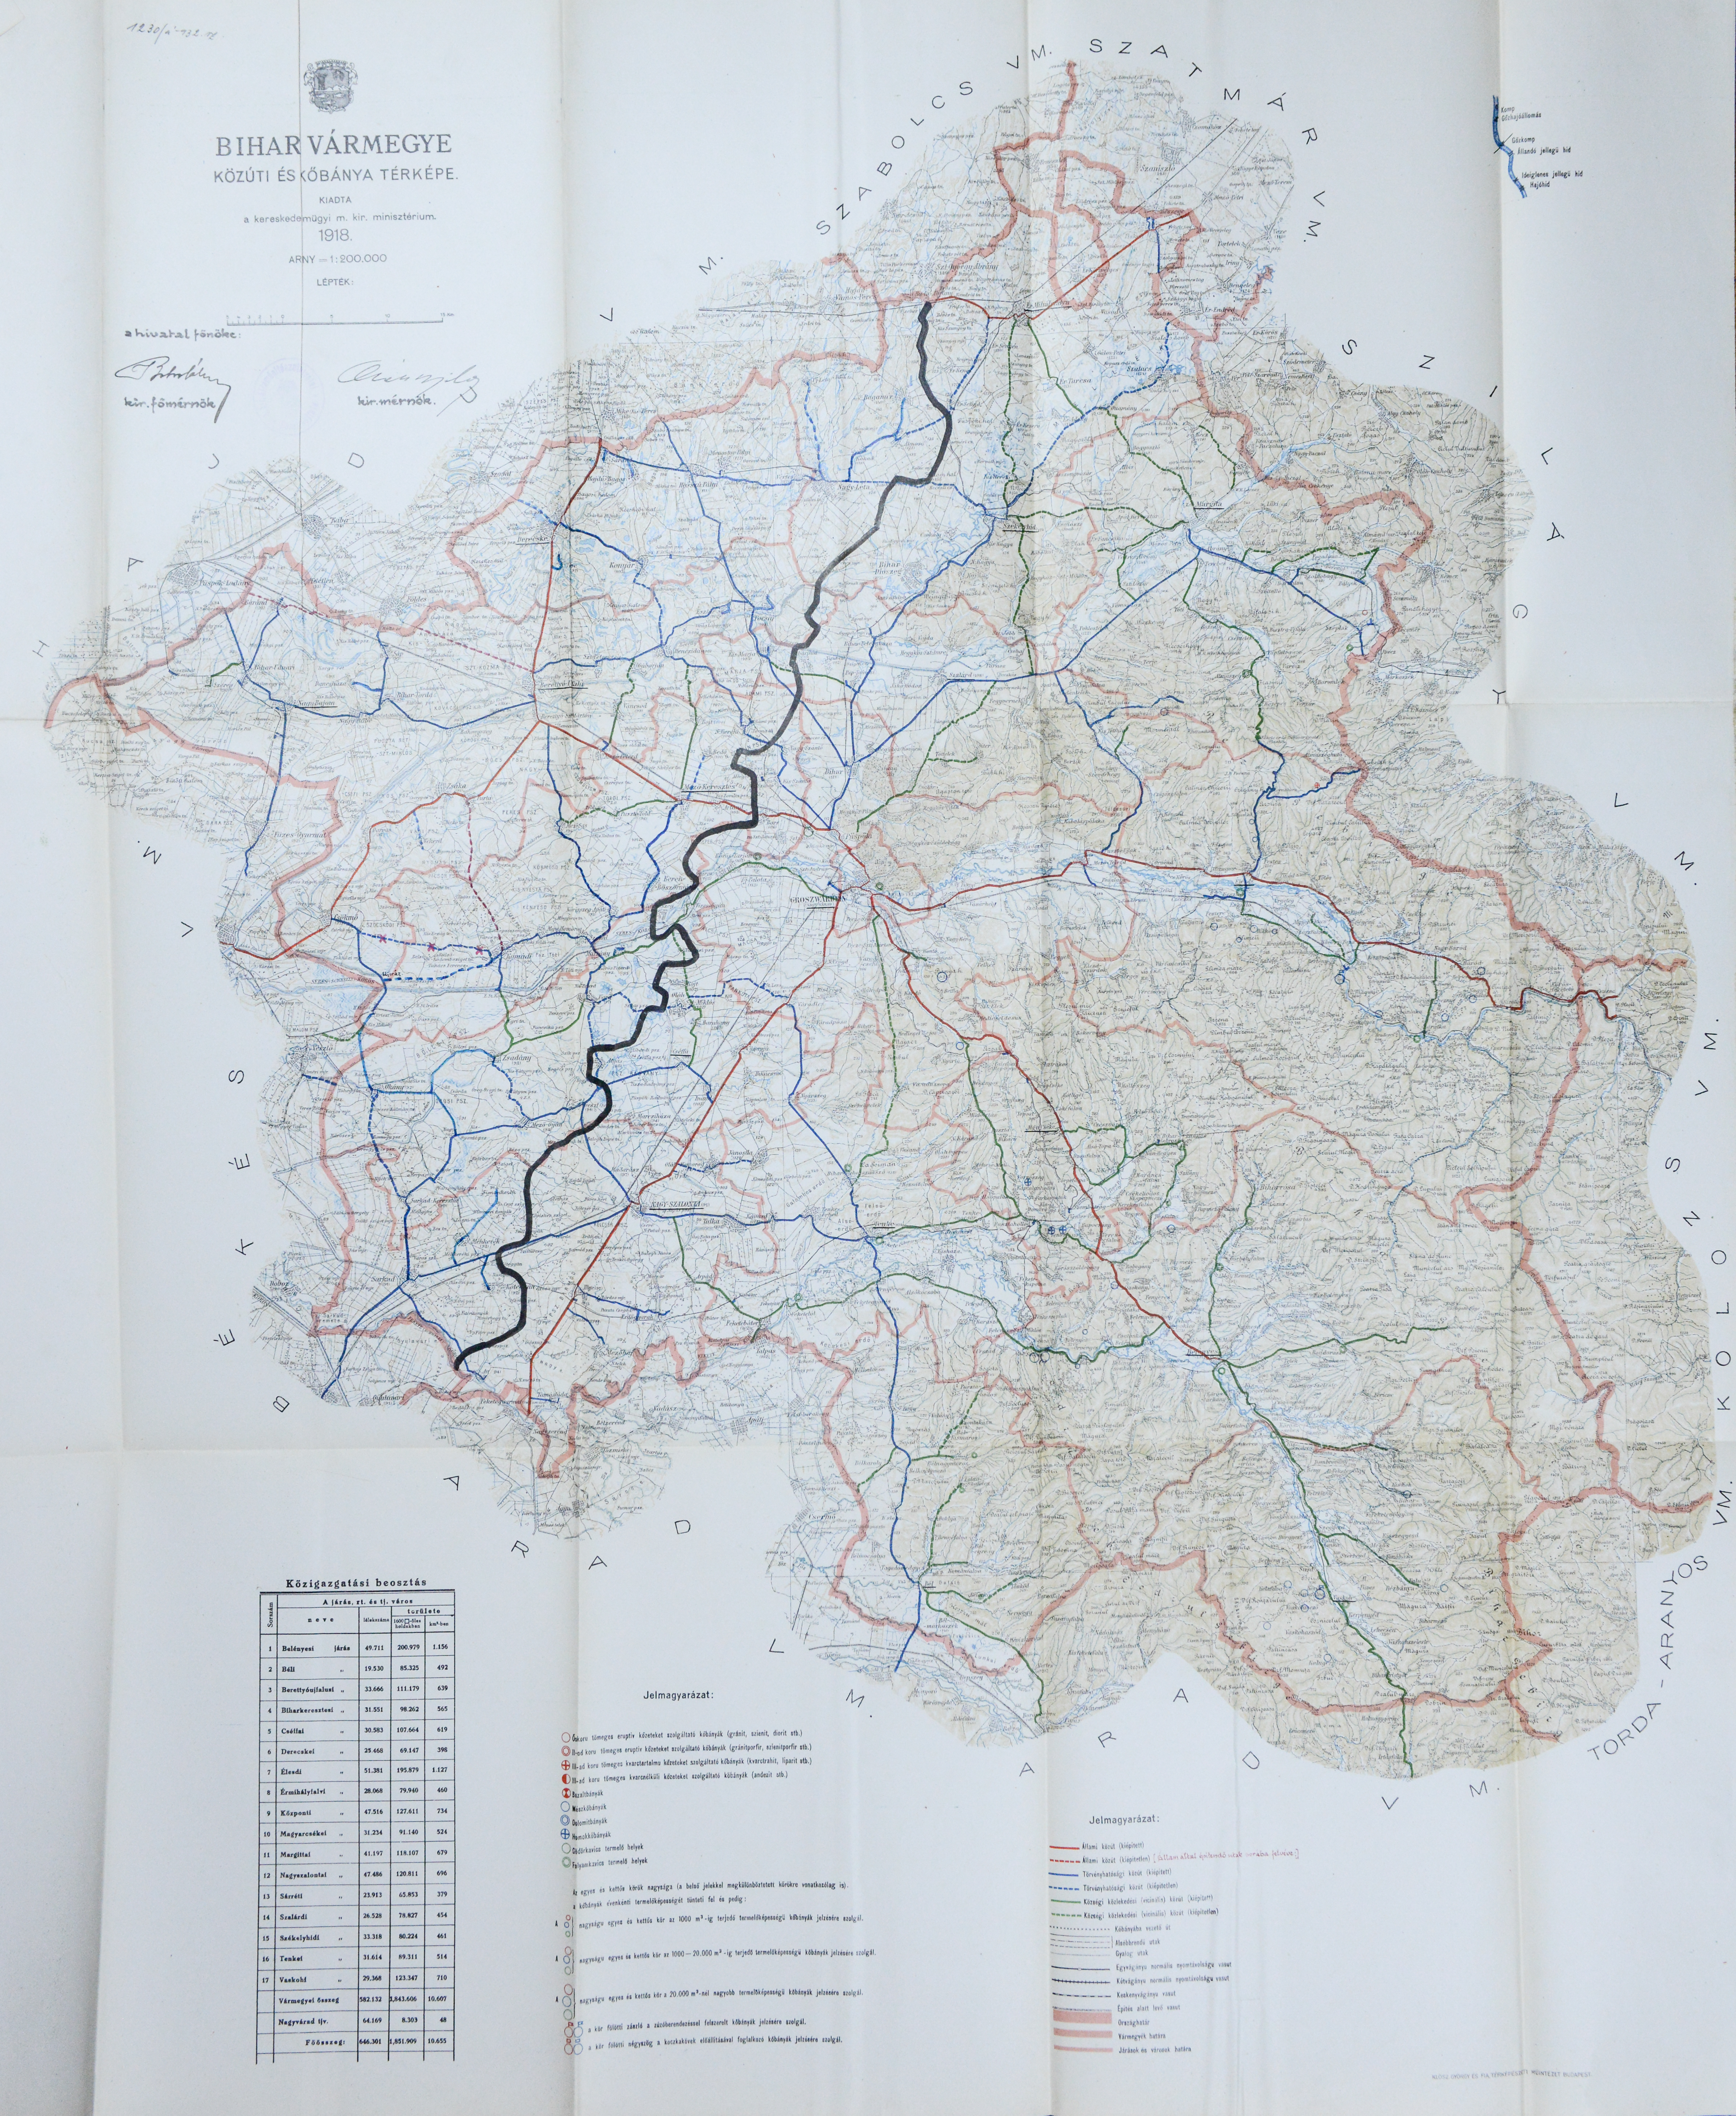 Bihar vármegye közúti térképe